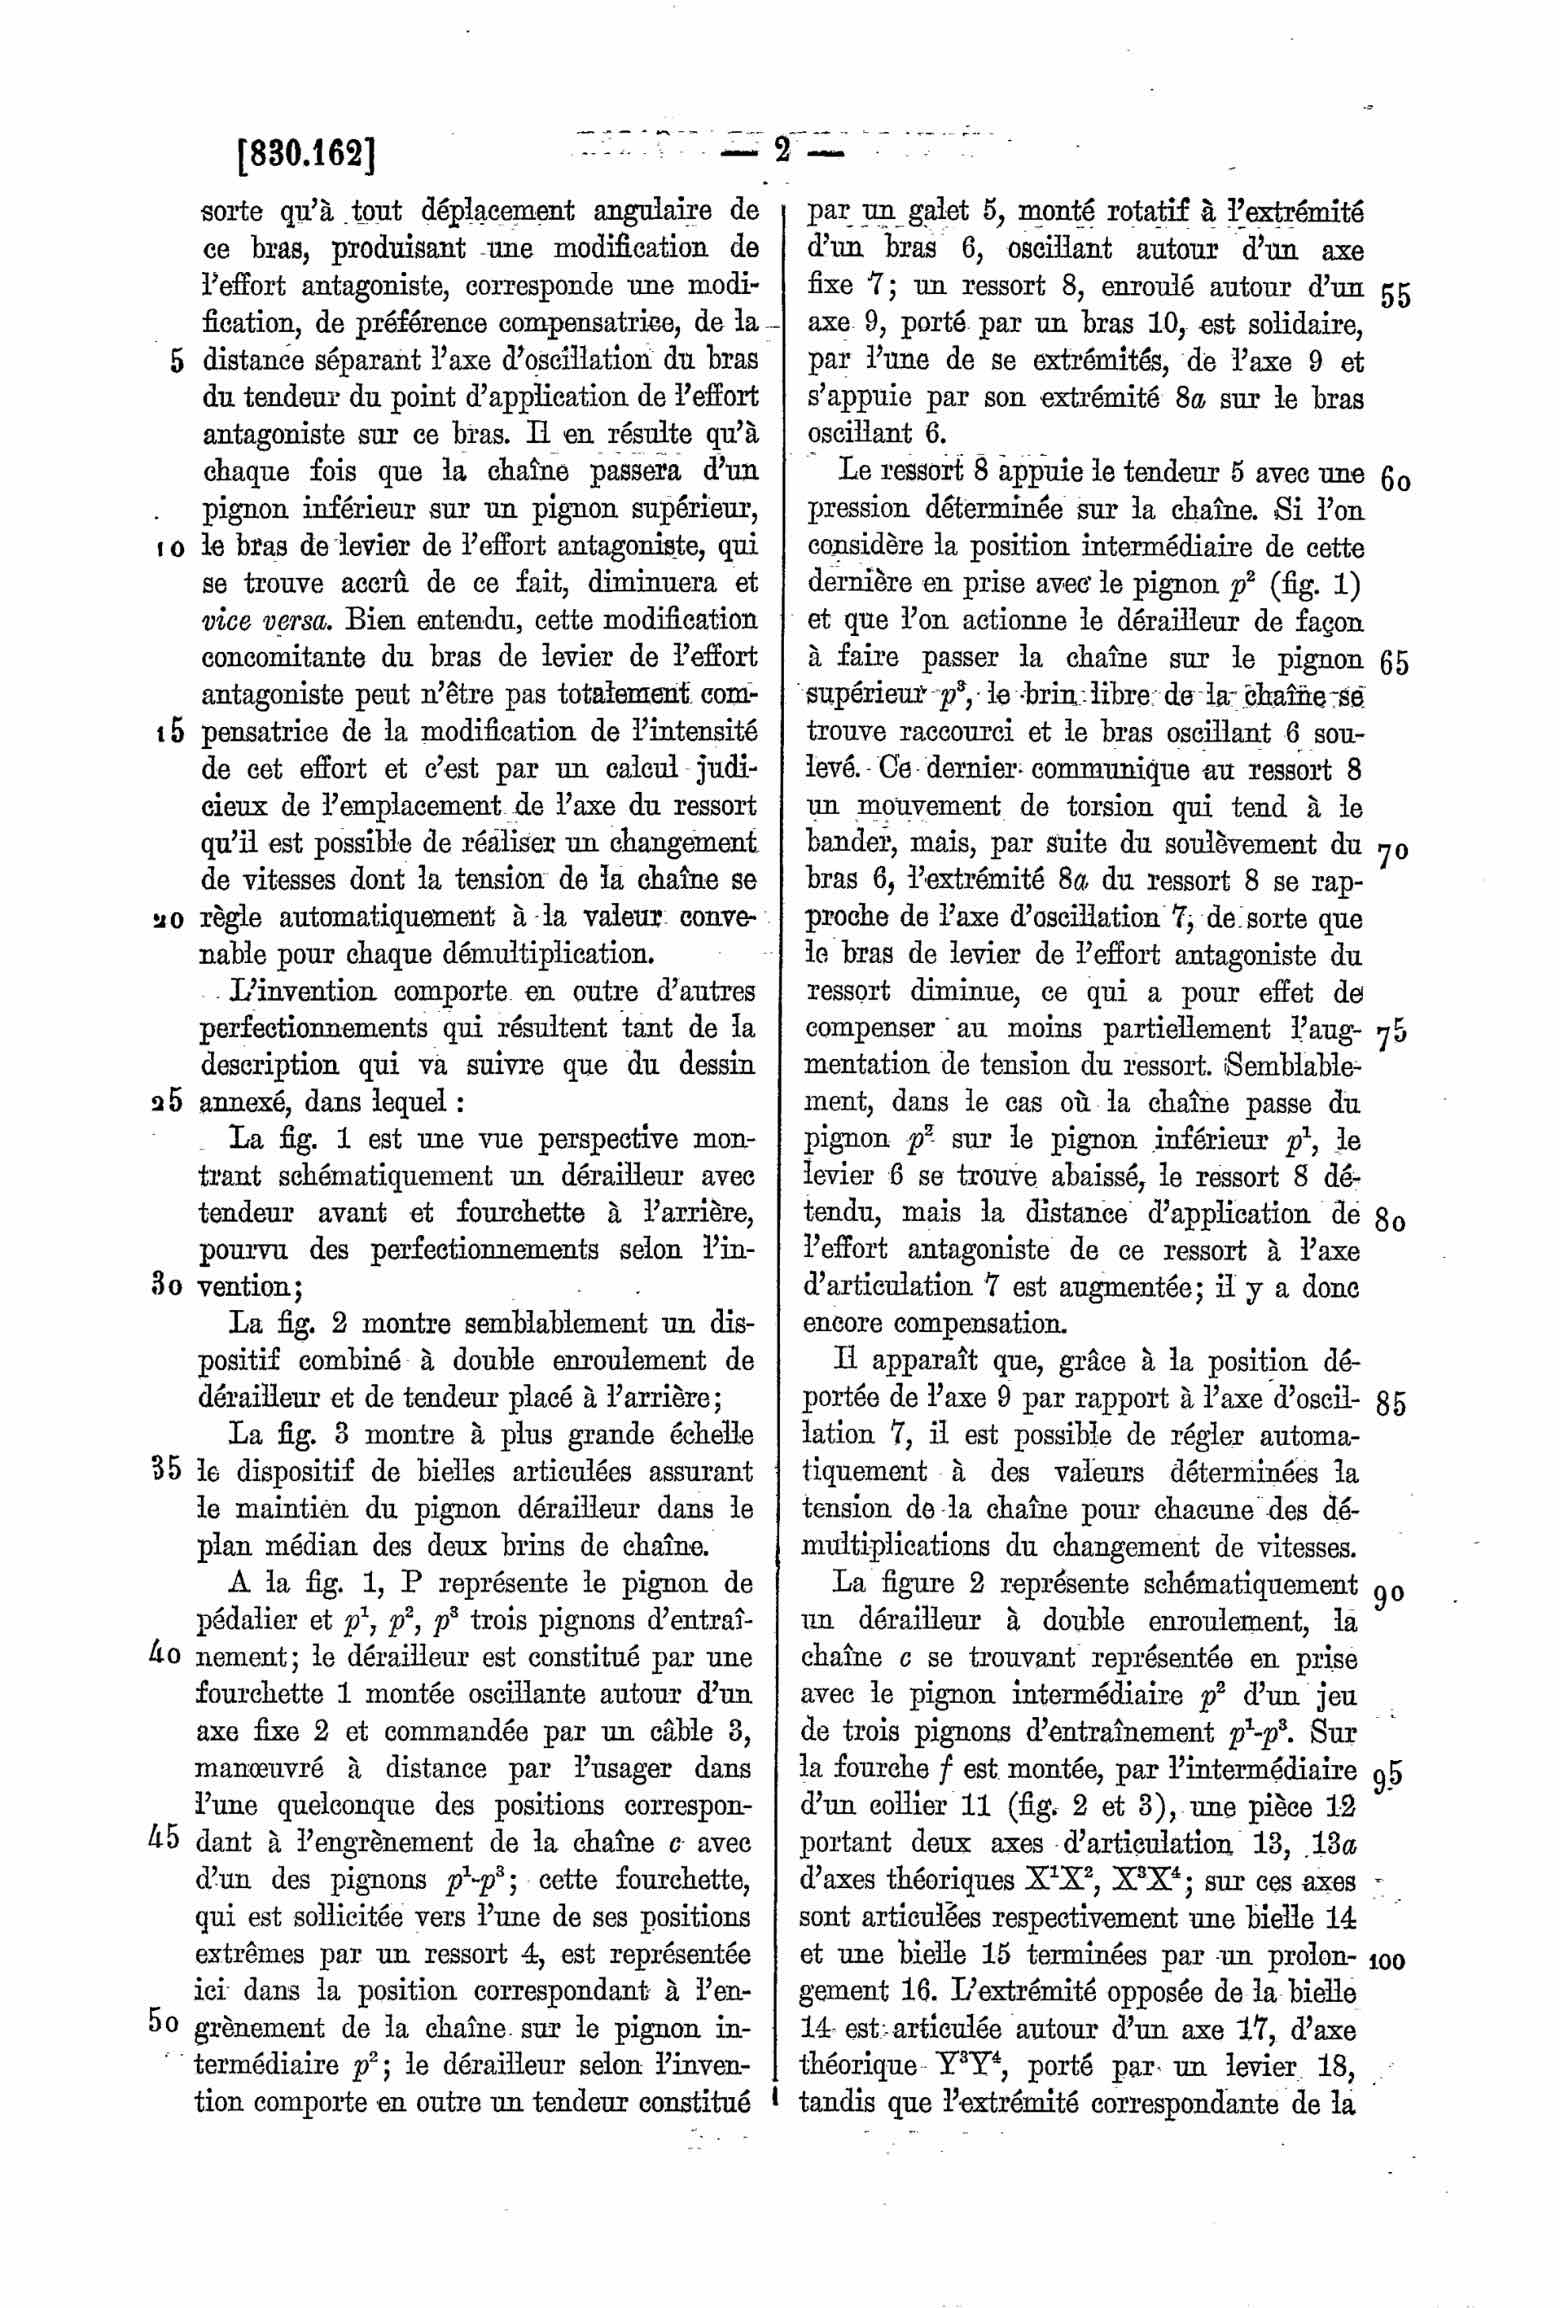 French Patent 830,162 - JIC scan 2 main image